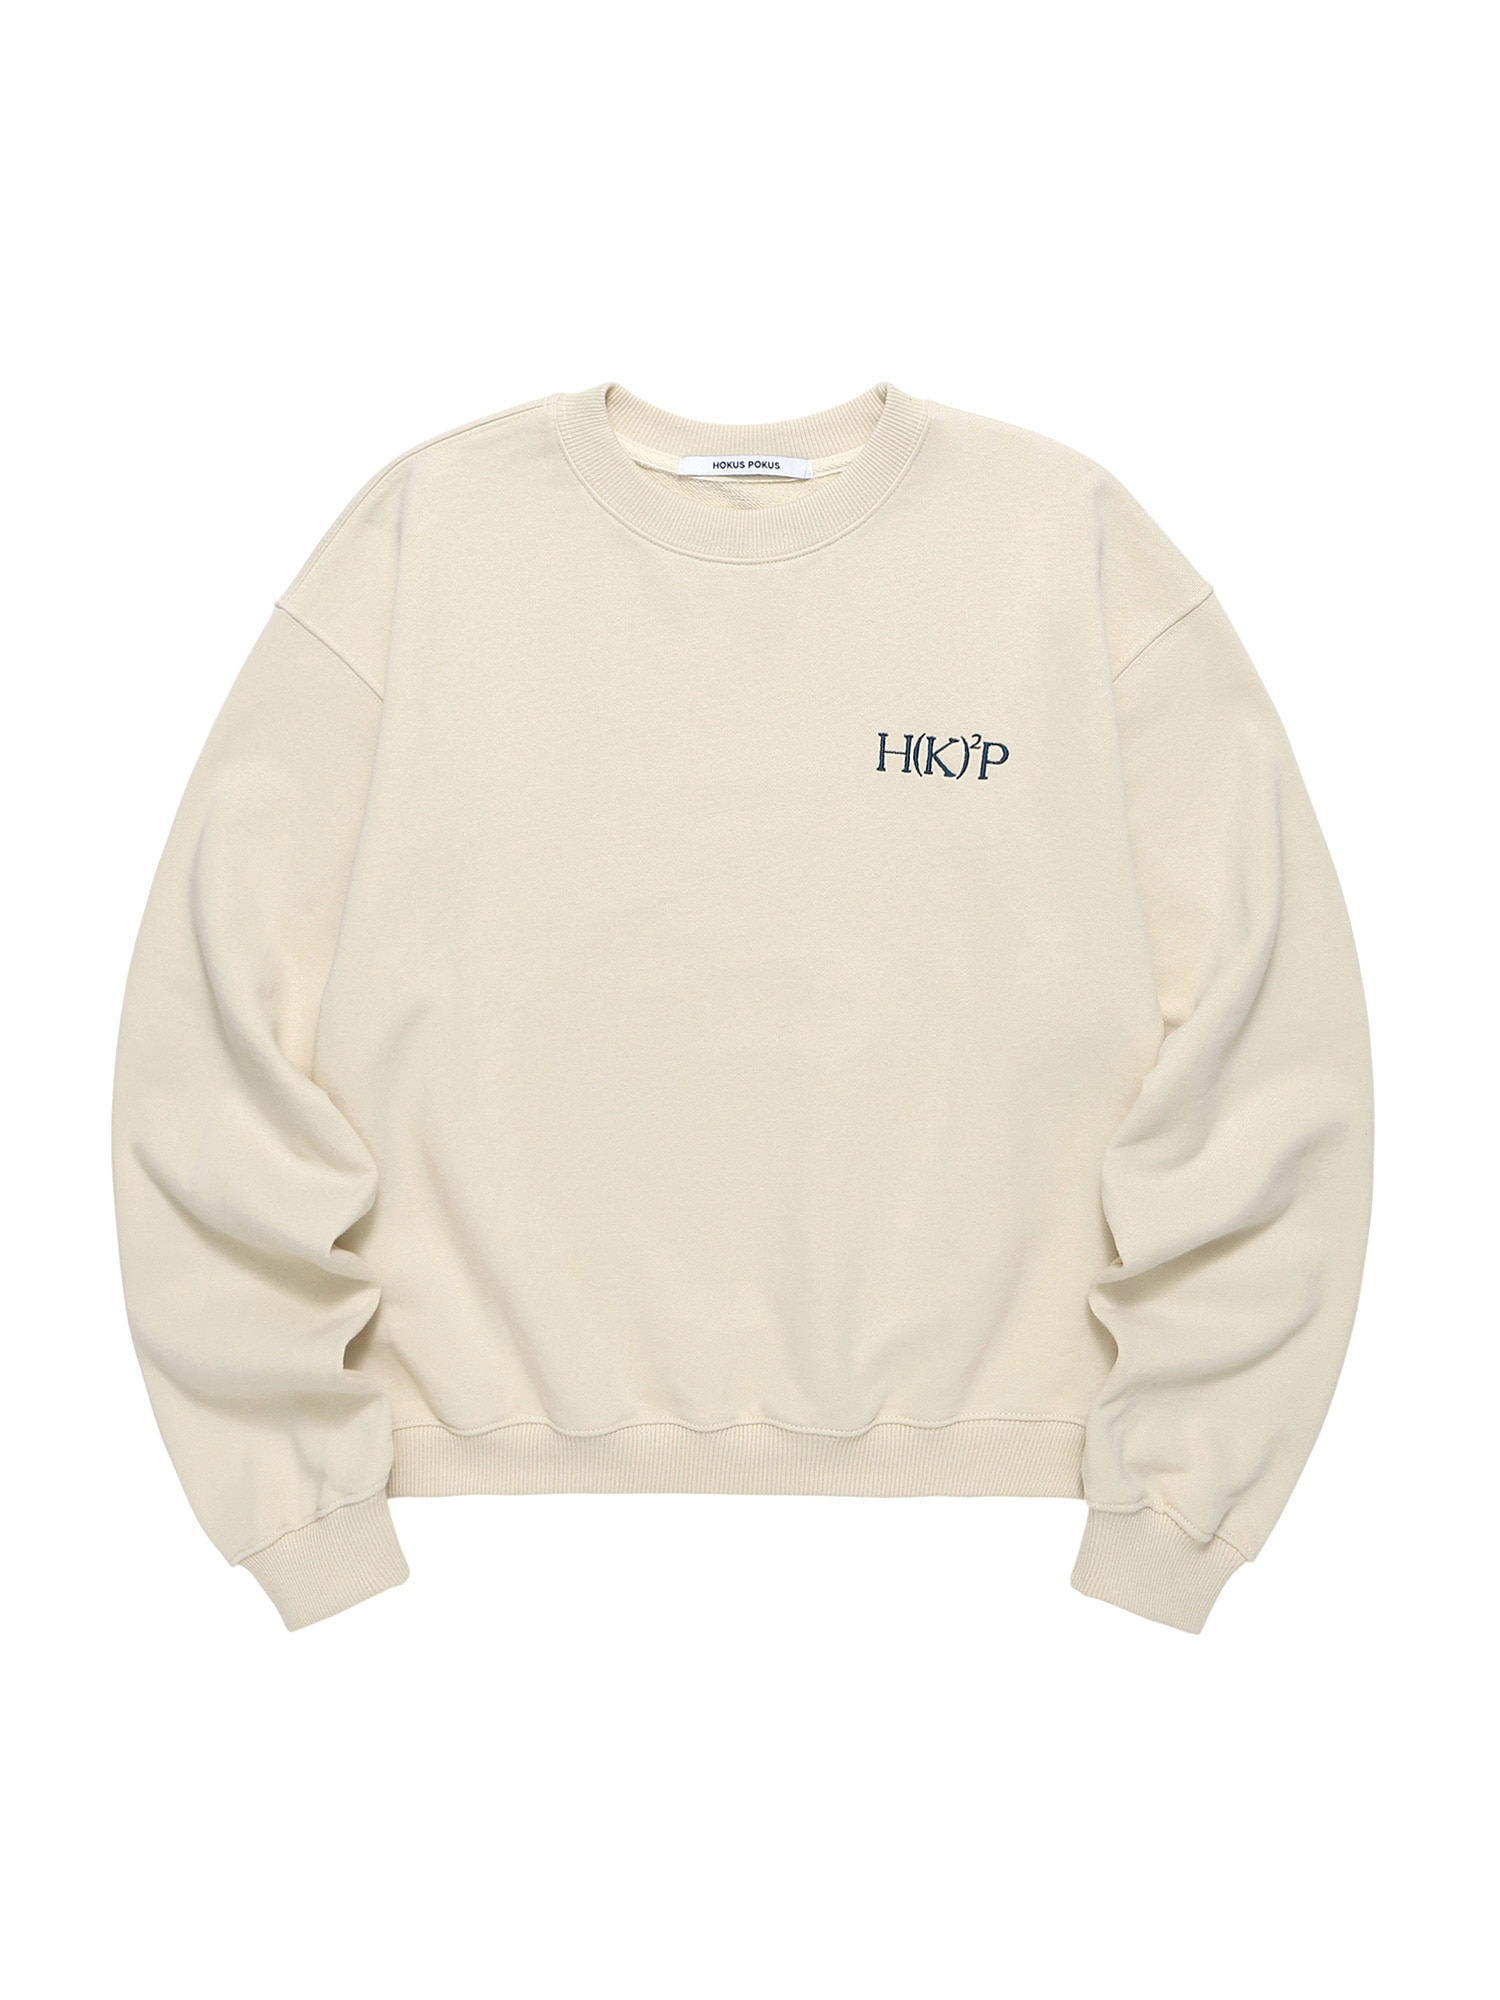 HK2P Sweatshirt - Butter